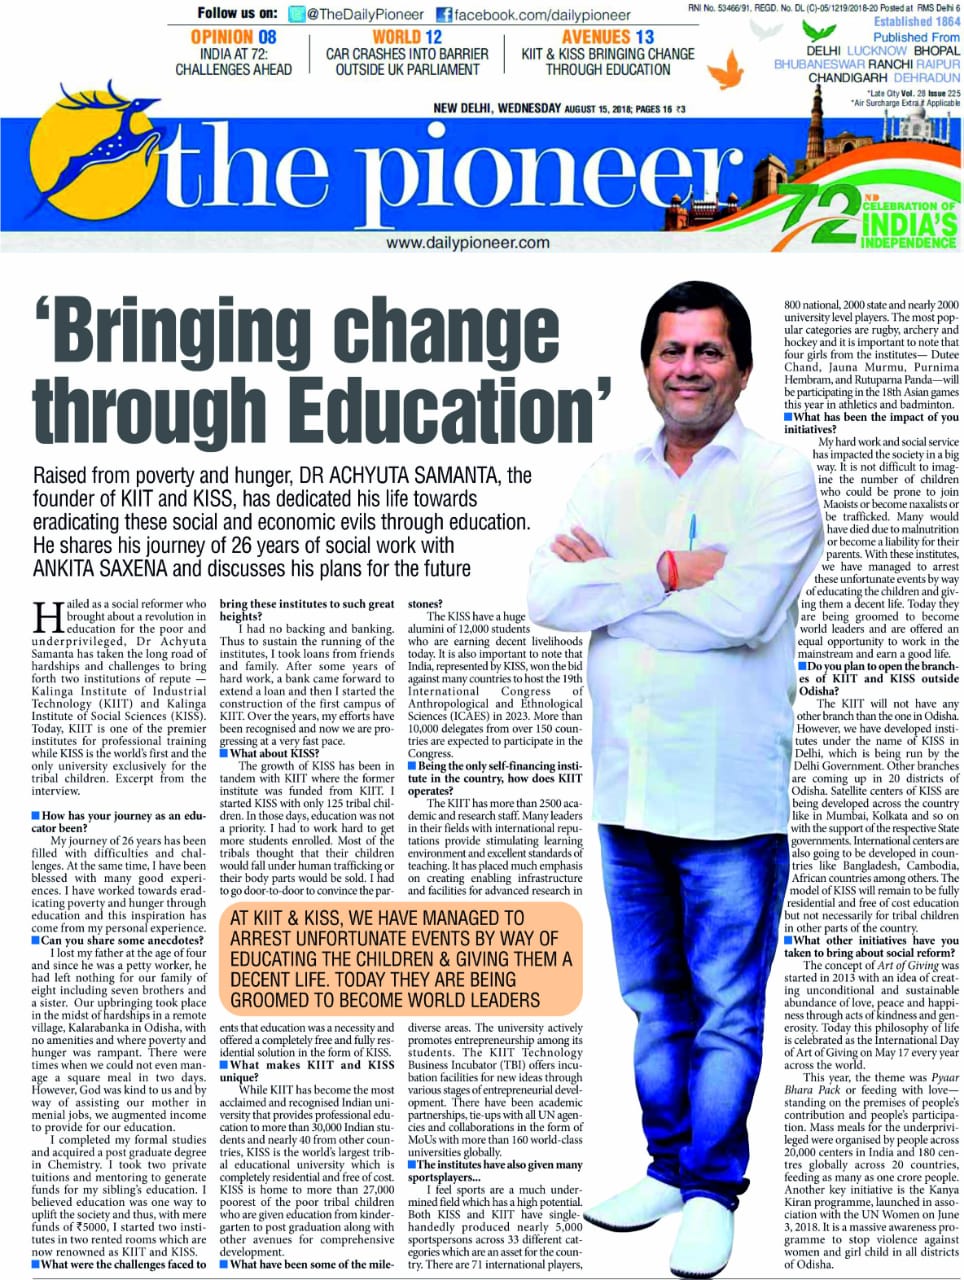 Bring Change through Education